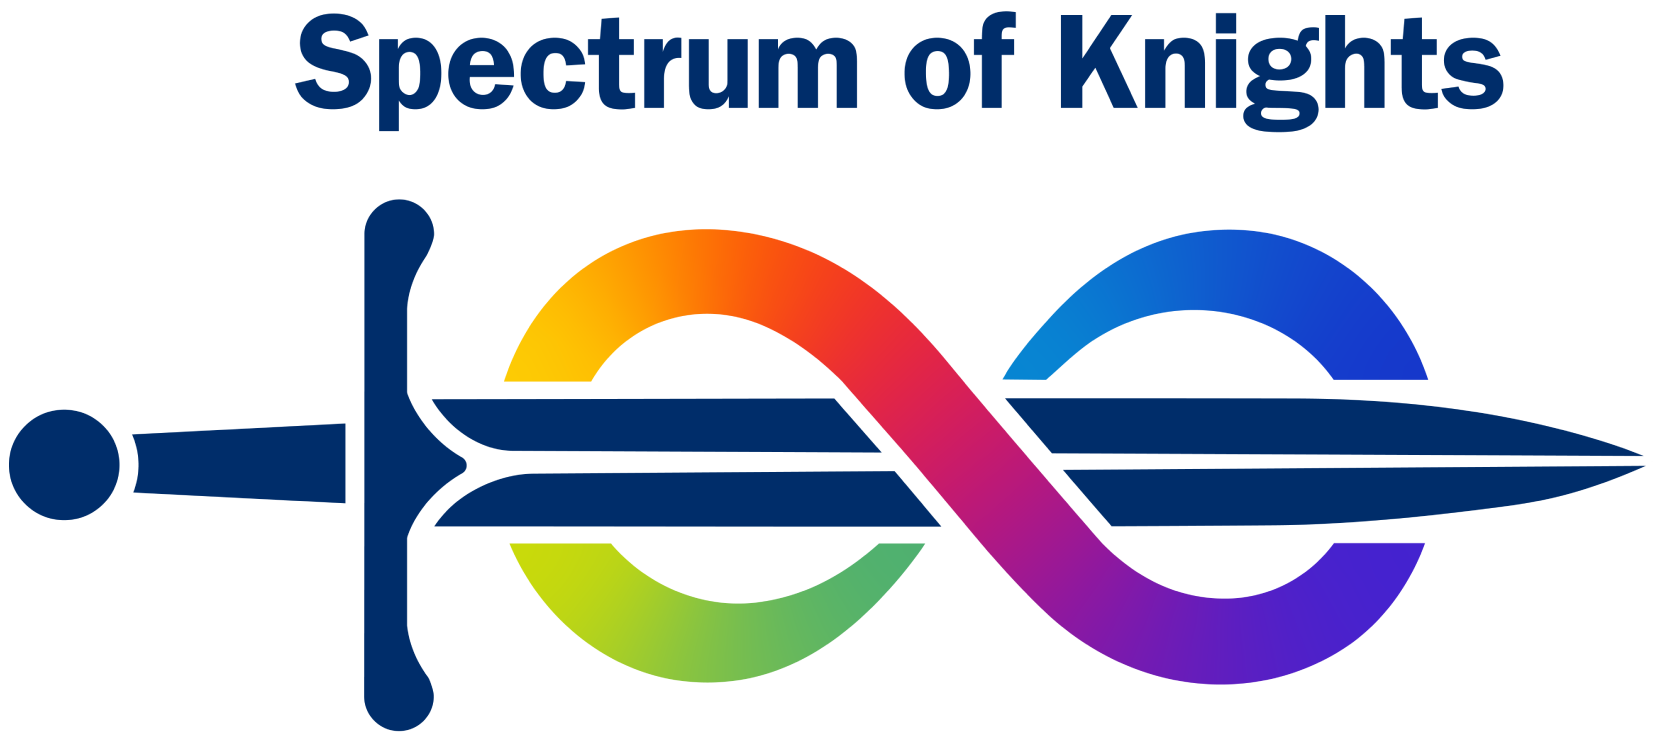 Spectrum of Knights Logo